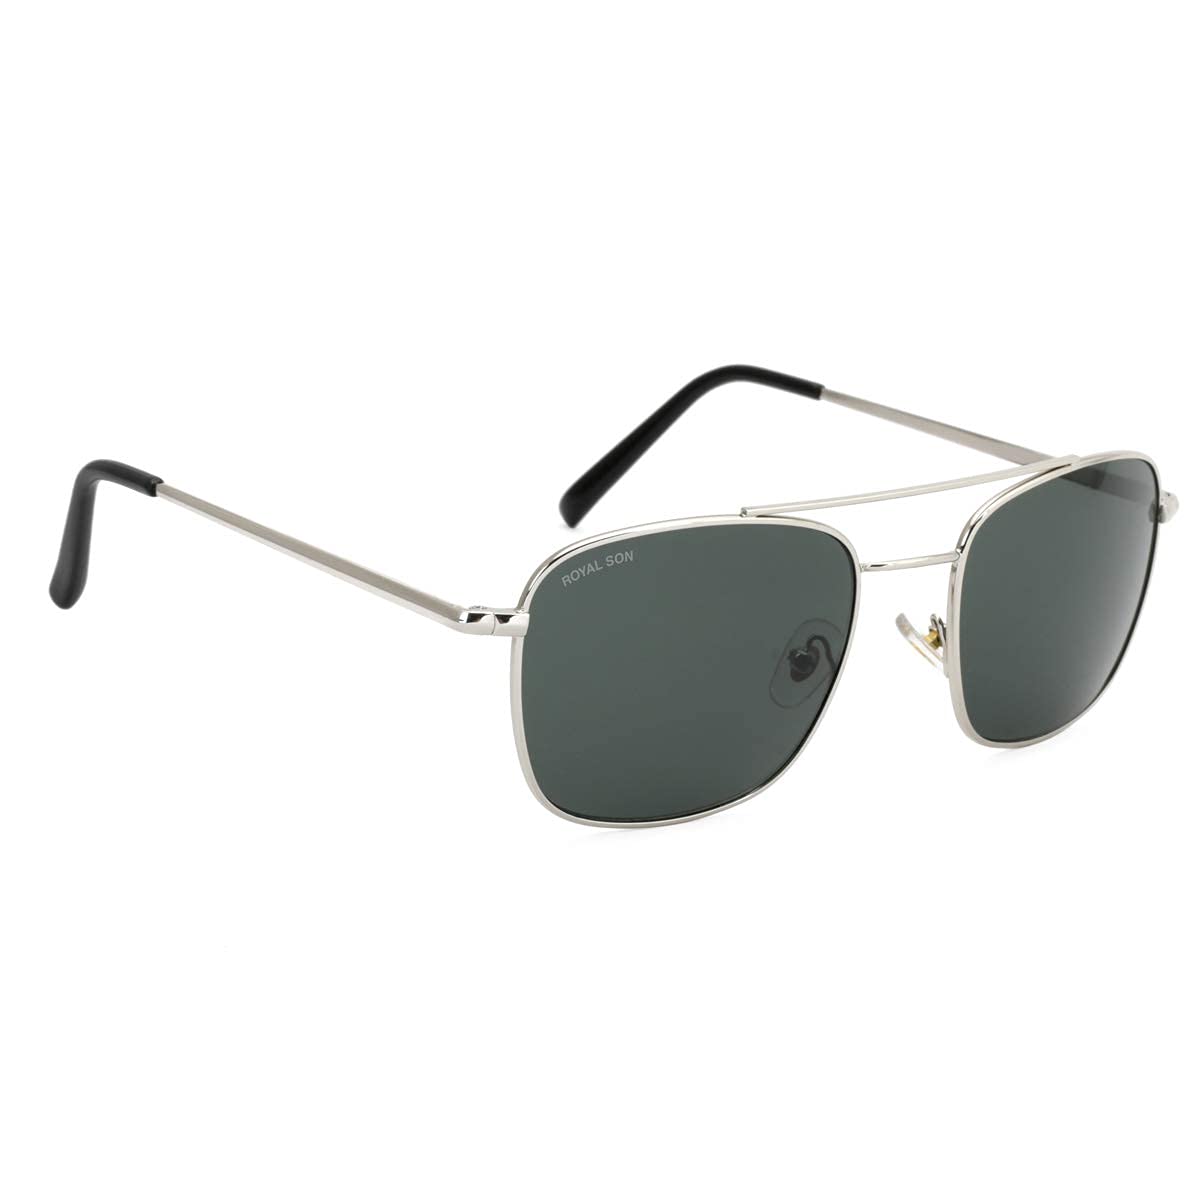 Tom Ford Men's Brown Square Sunglasses